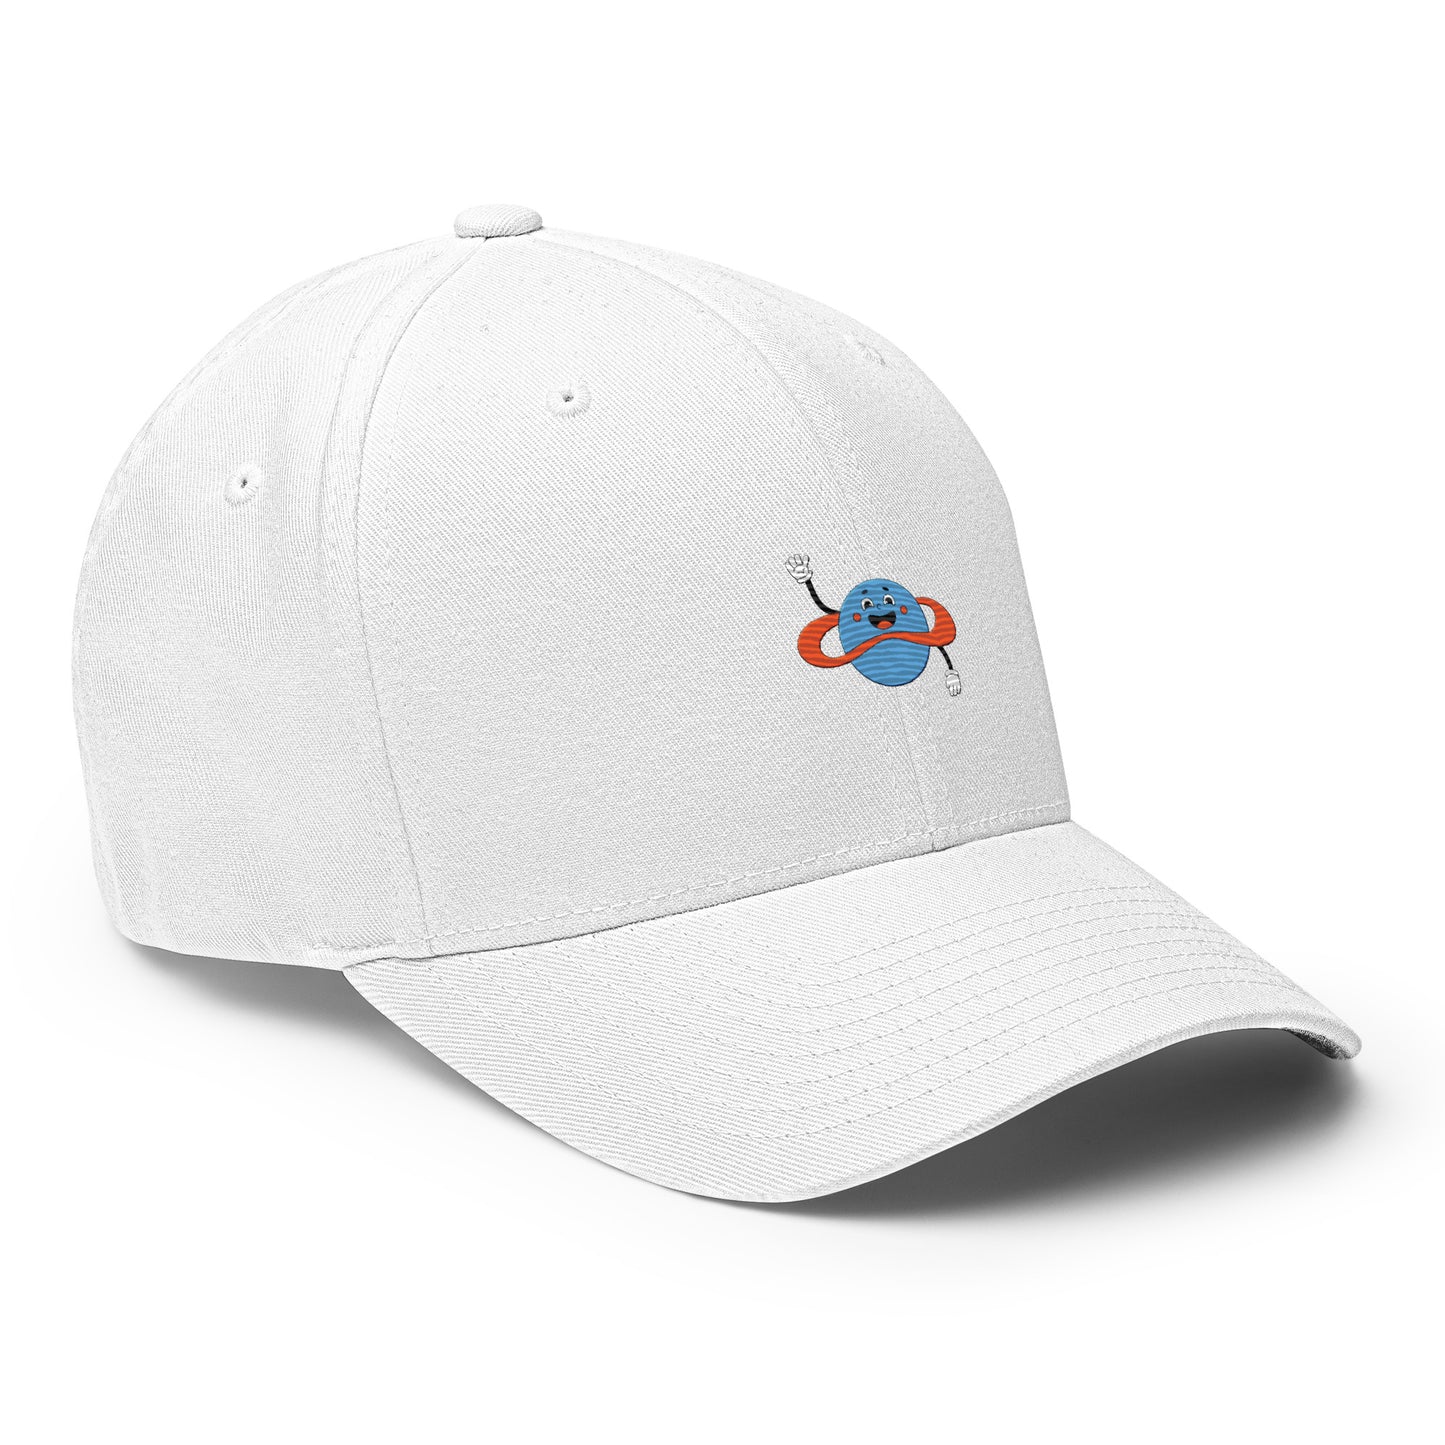 Baseball Cap with Planet Symbol